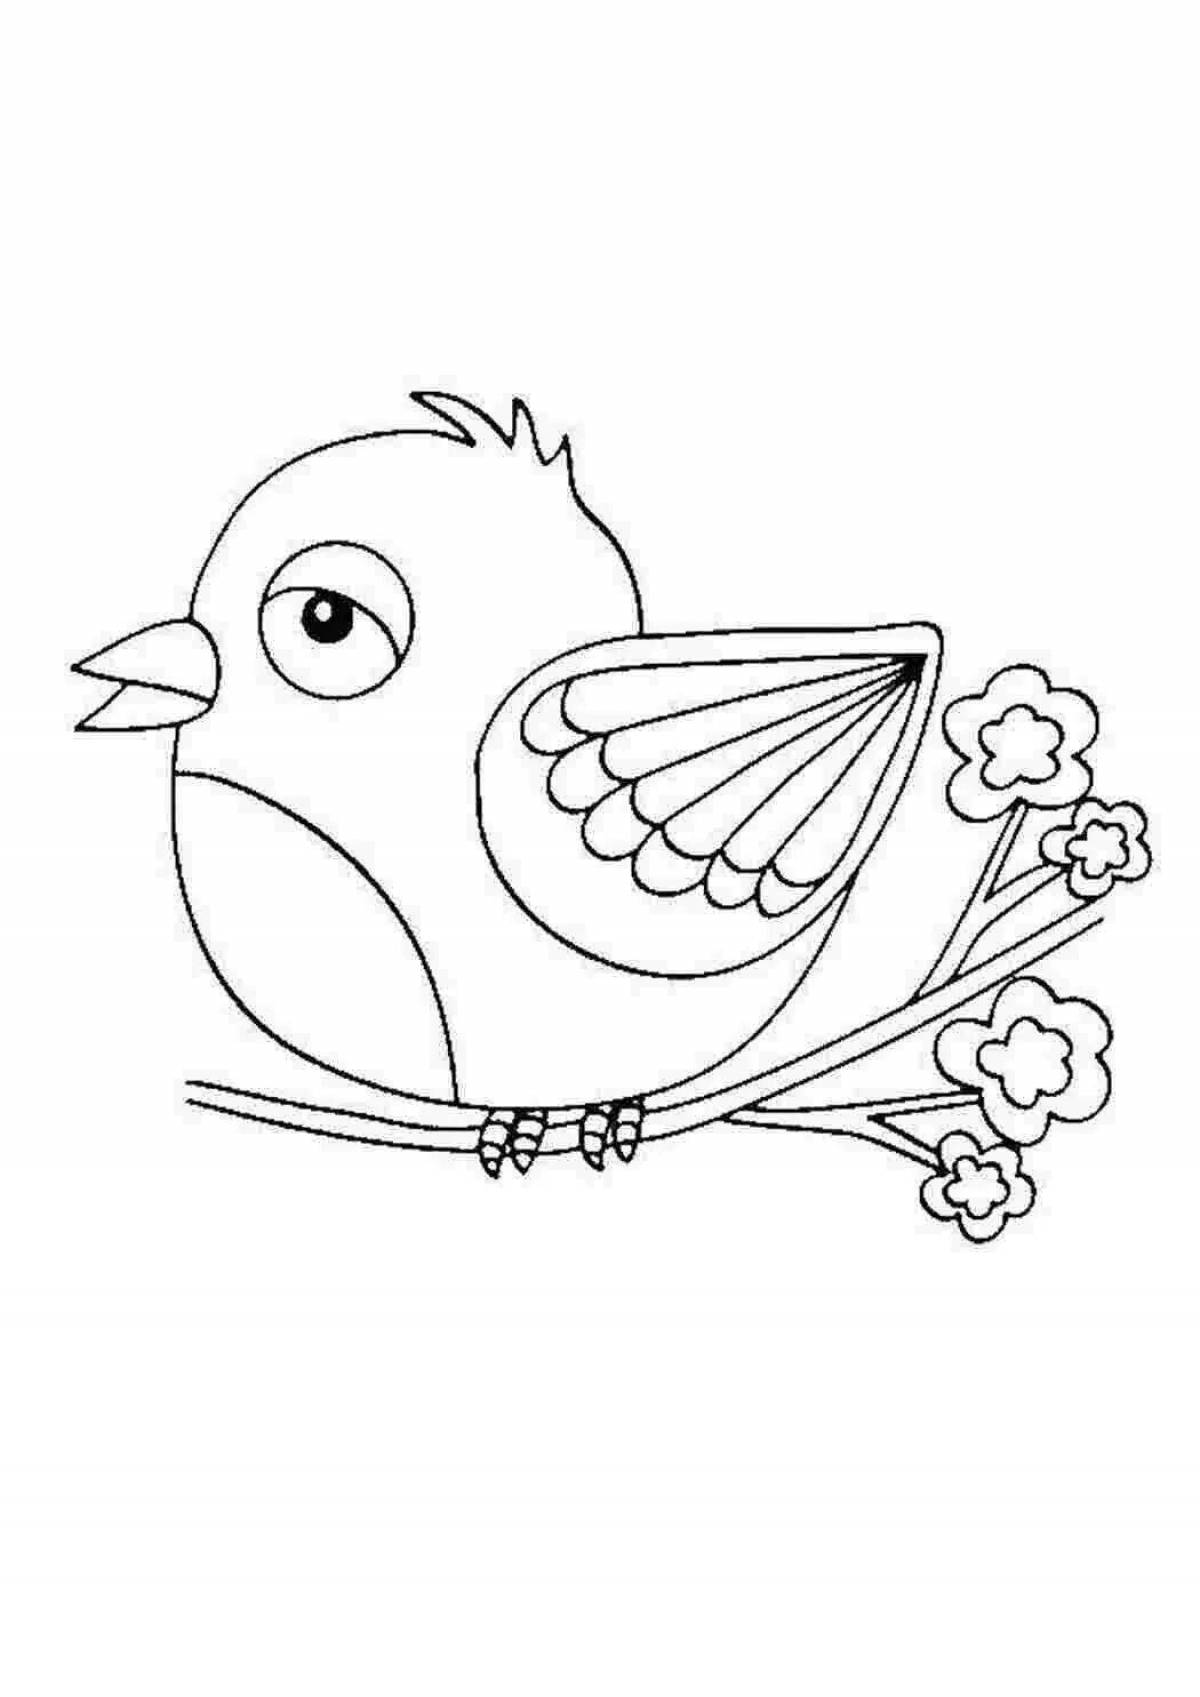 Joyful bird drawing for kids